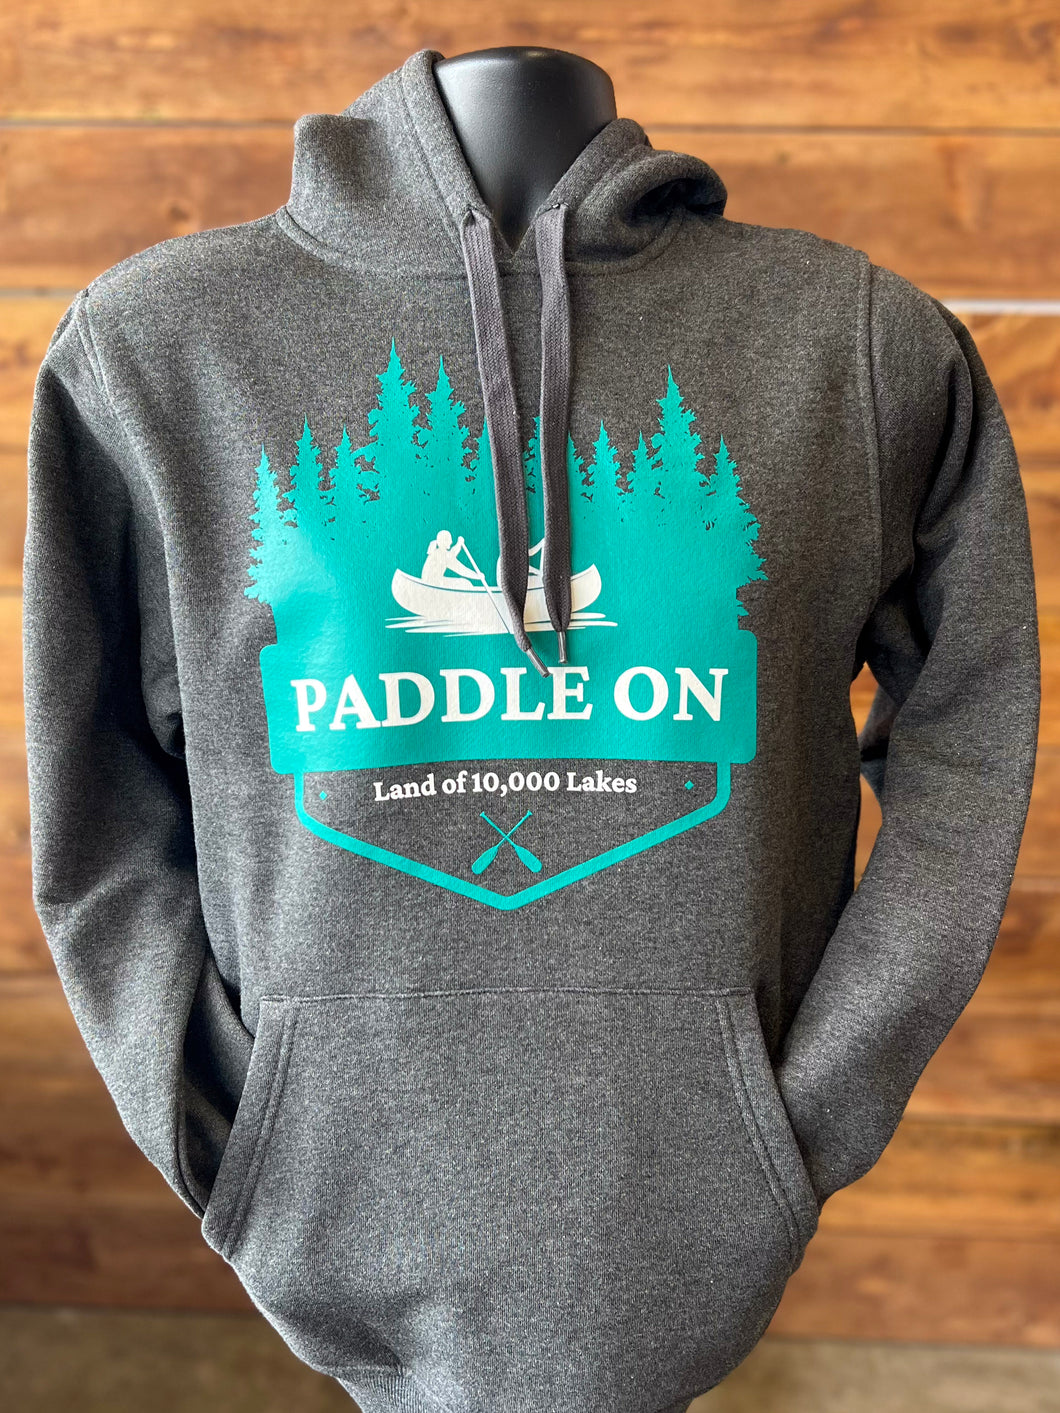 Grey hooded sweatshirt that says Paddle On land of 10,000 lakes